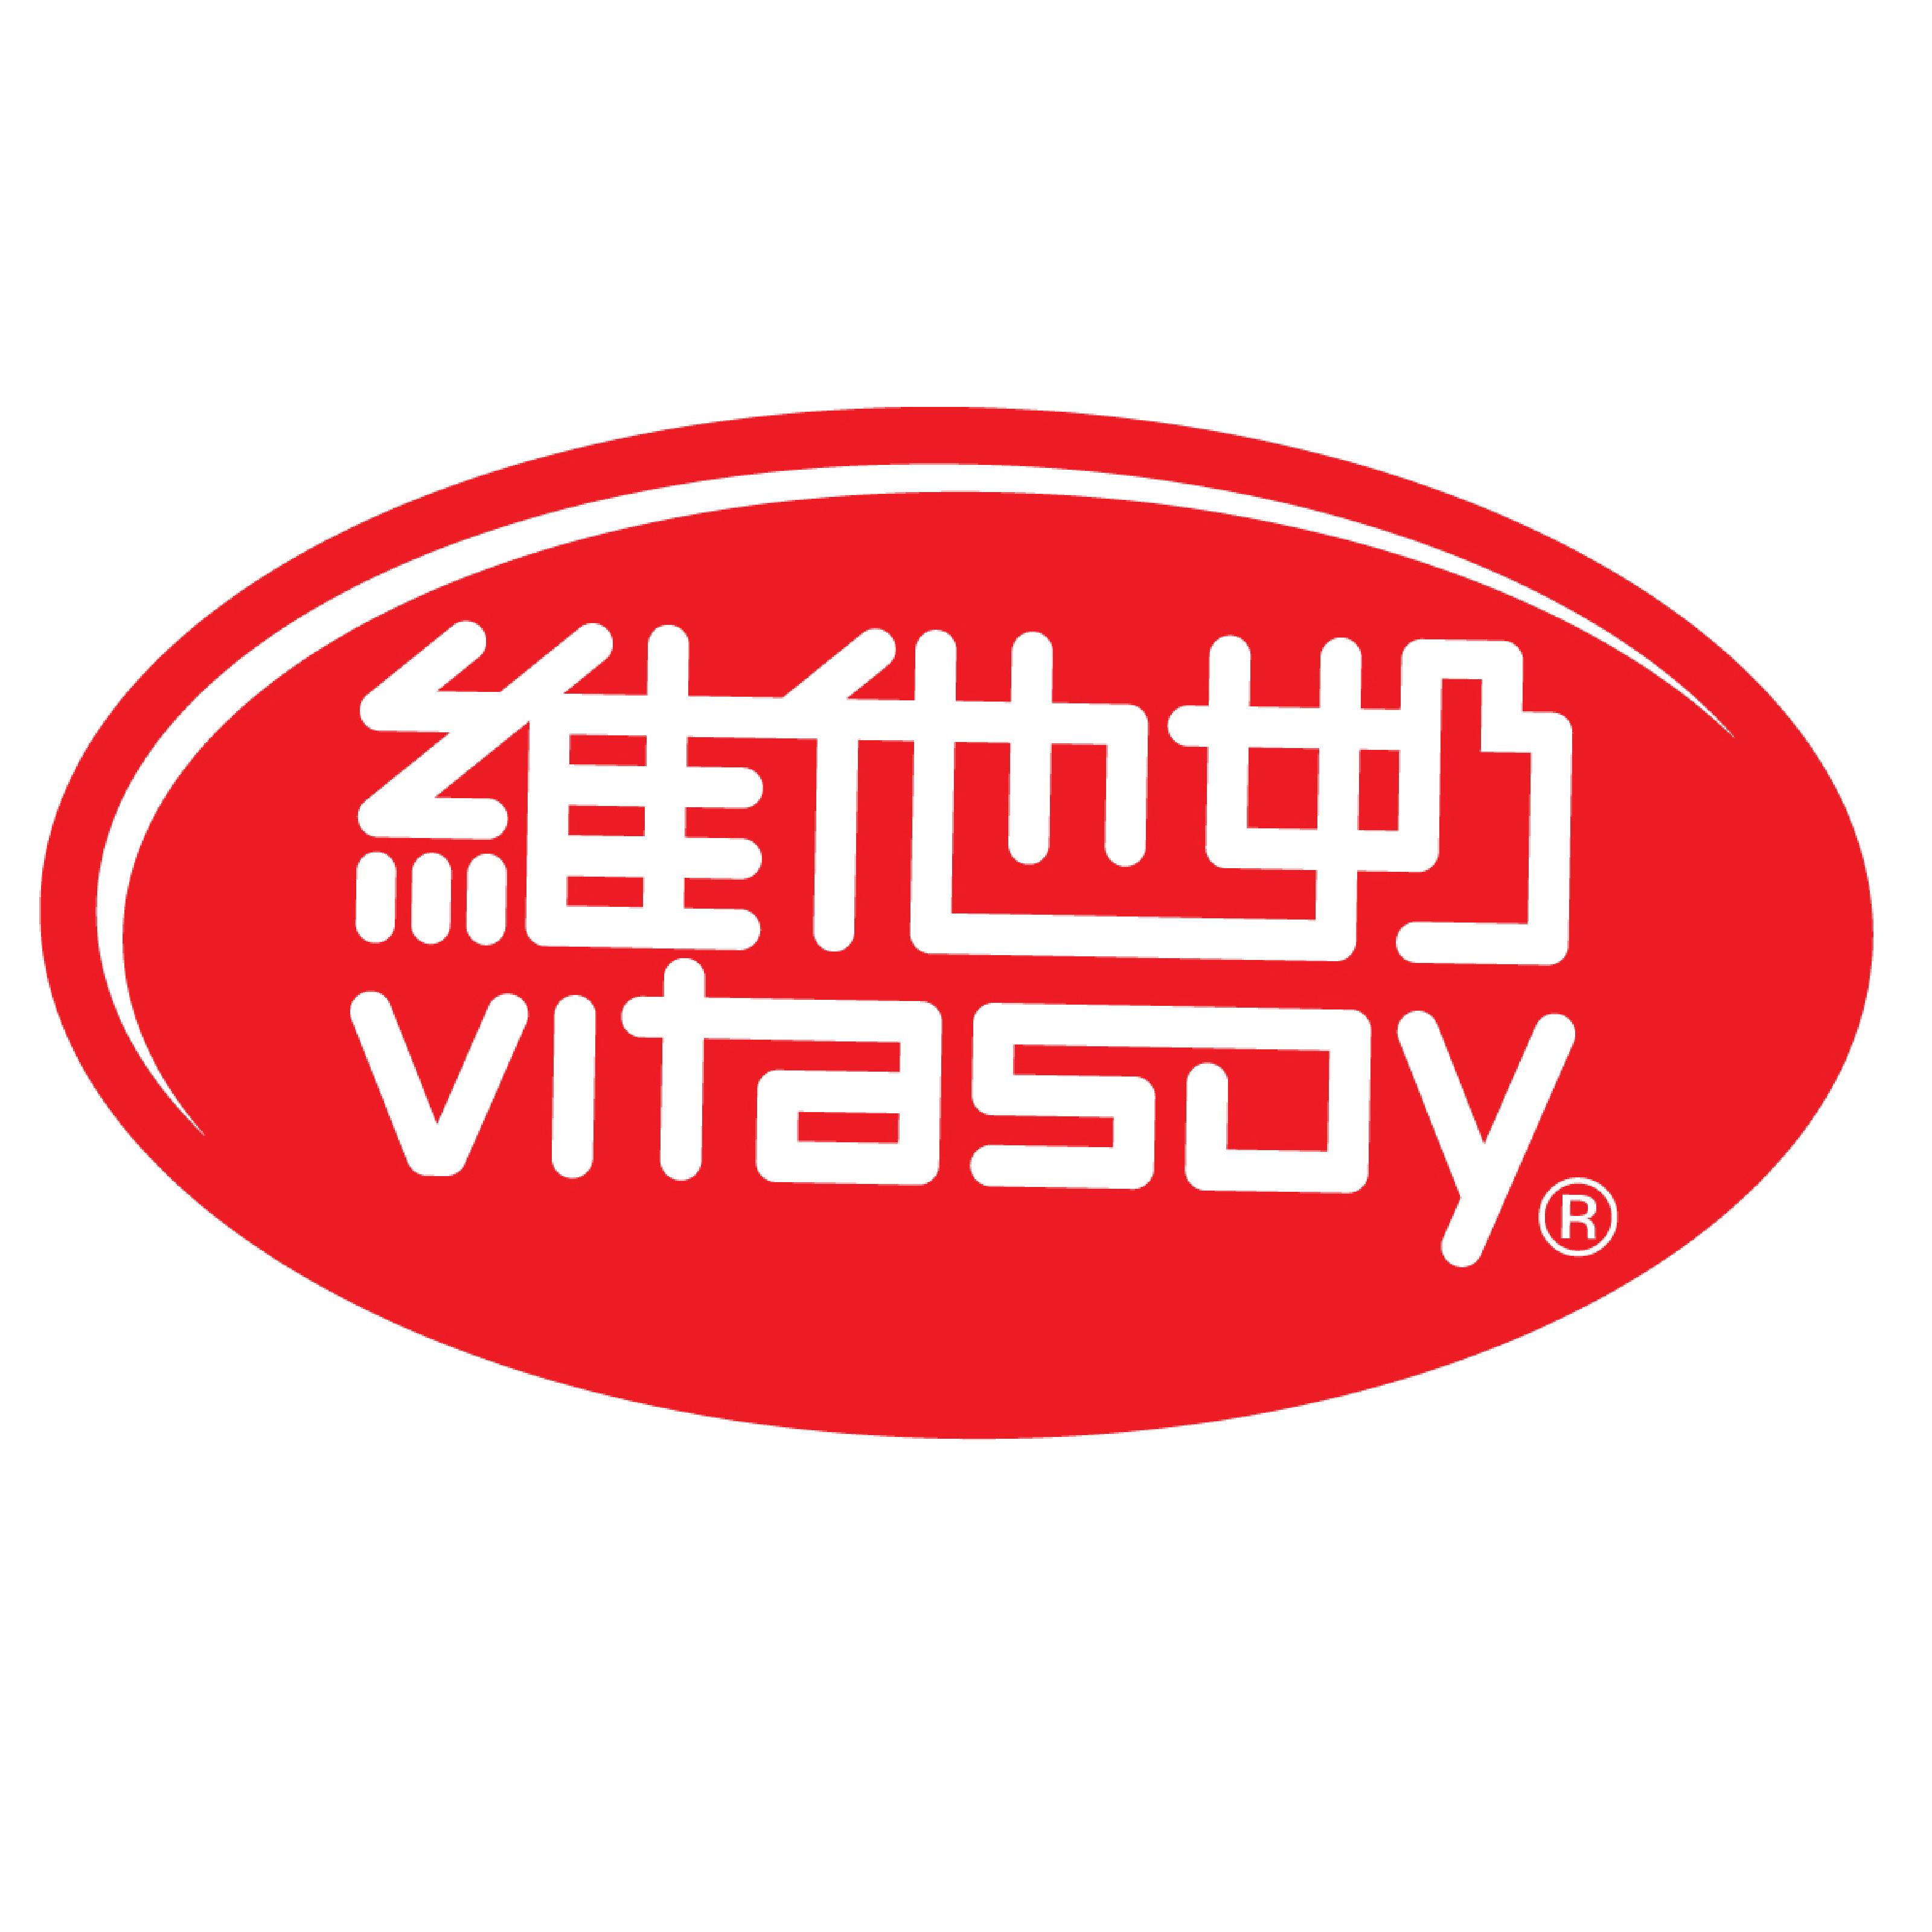 Vitasoy International Holdings Limited